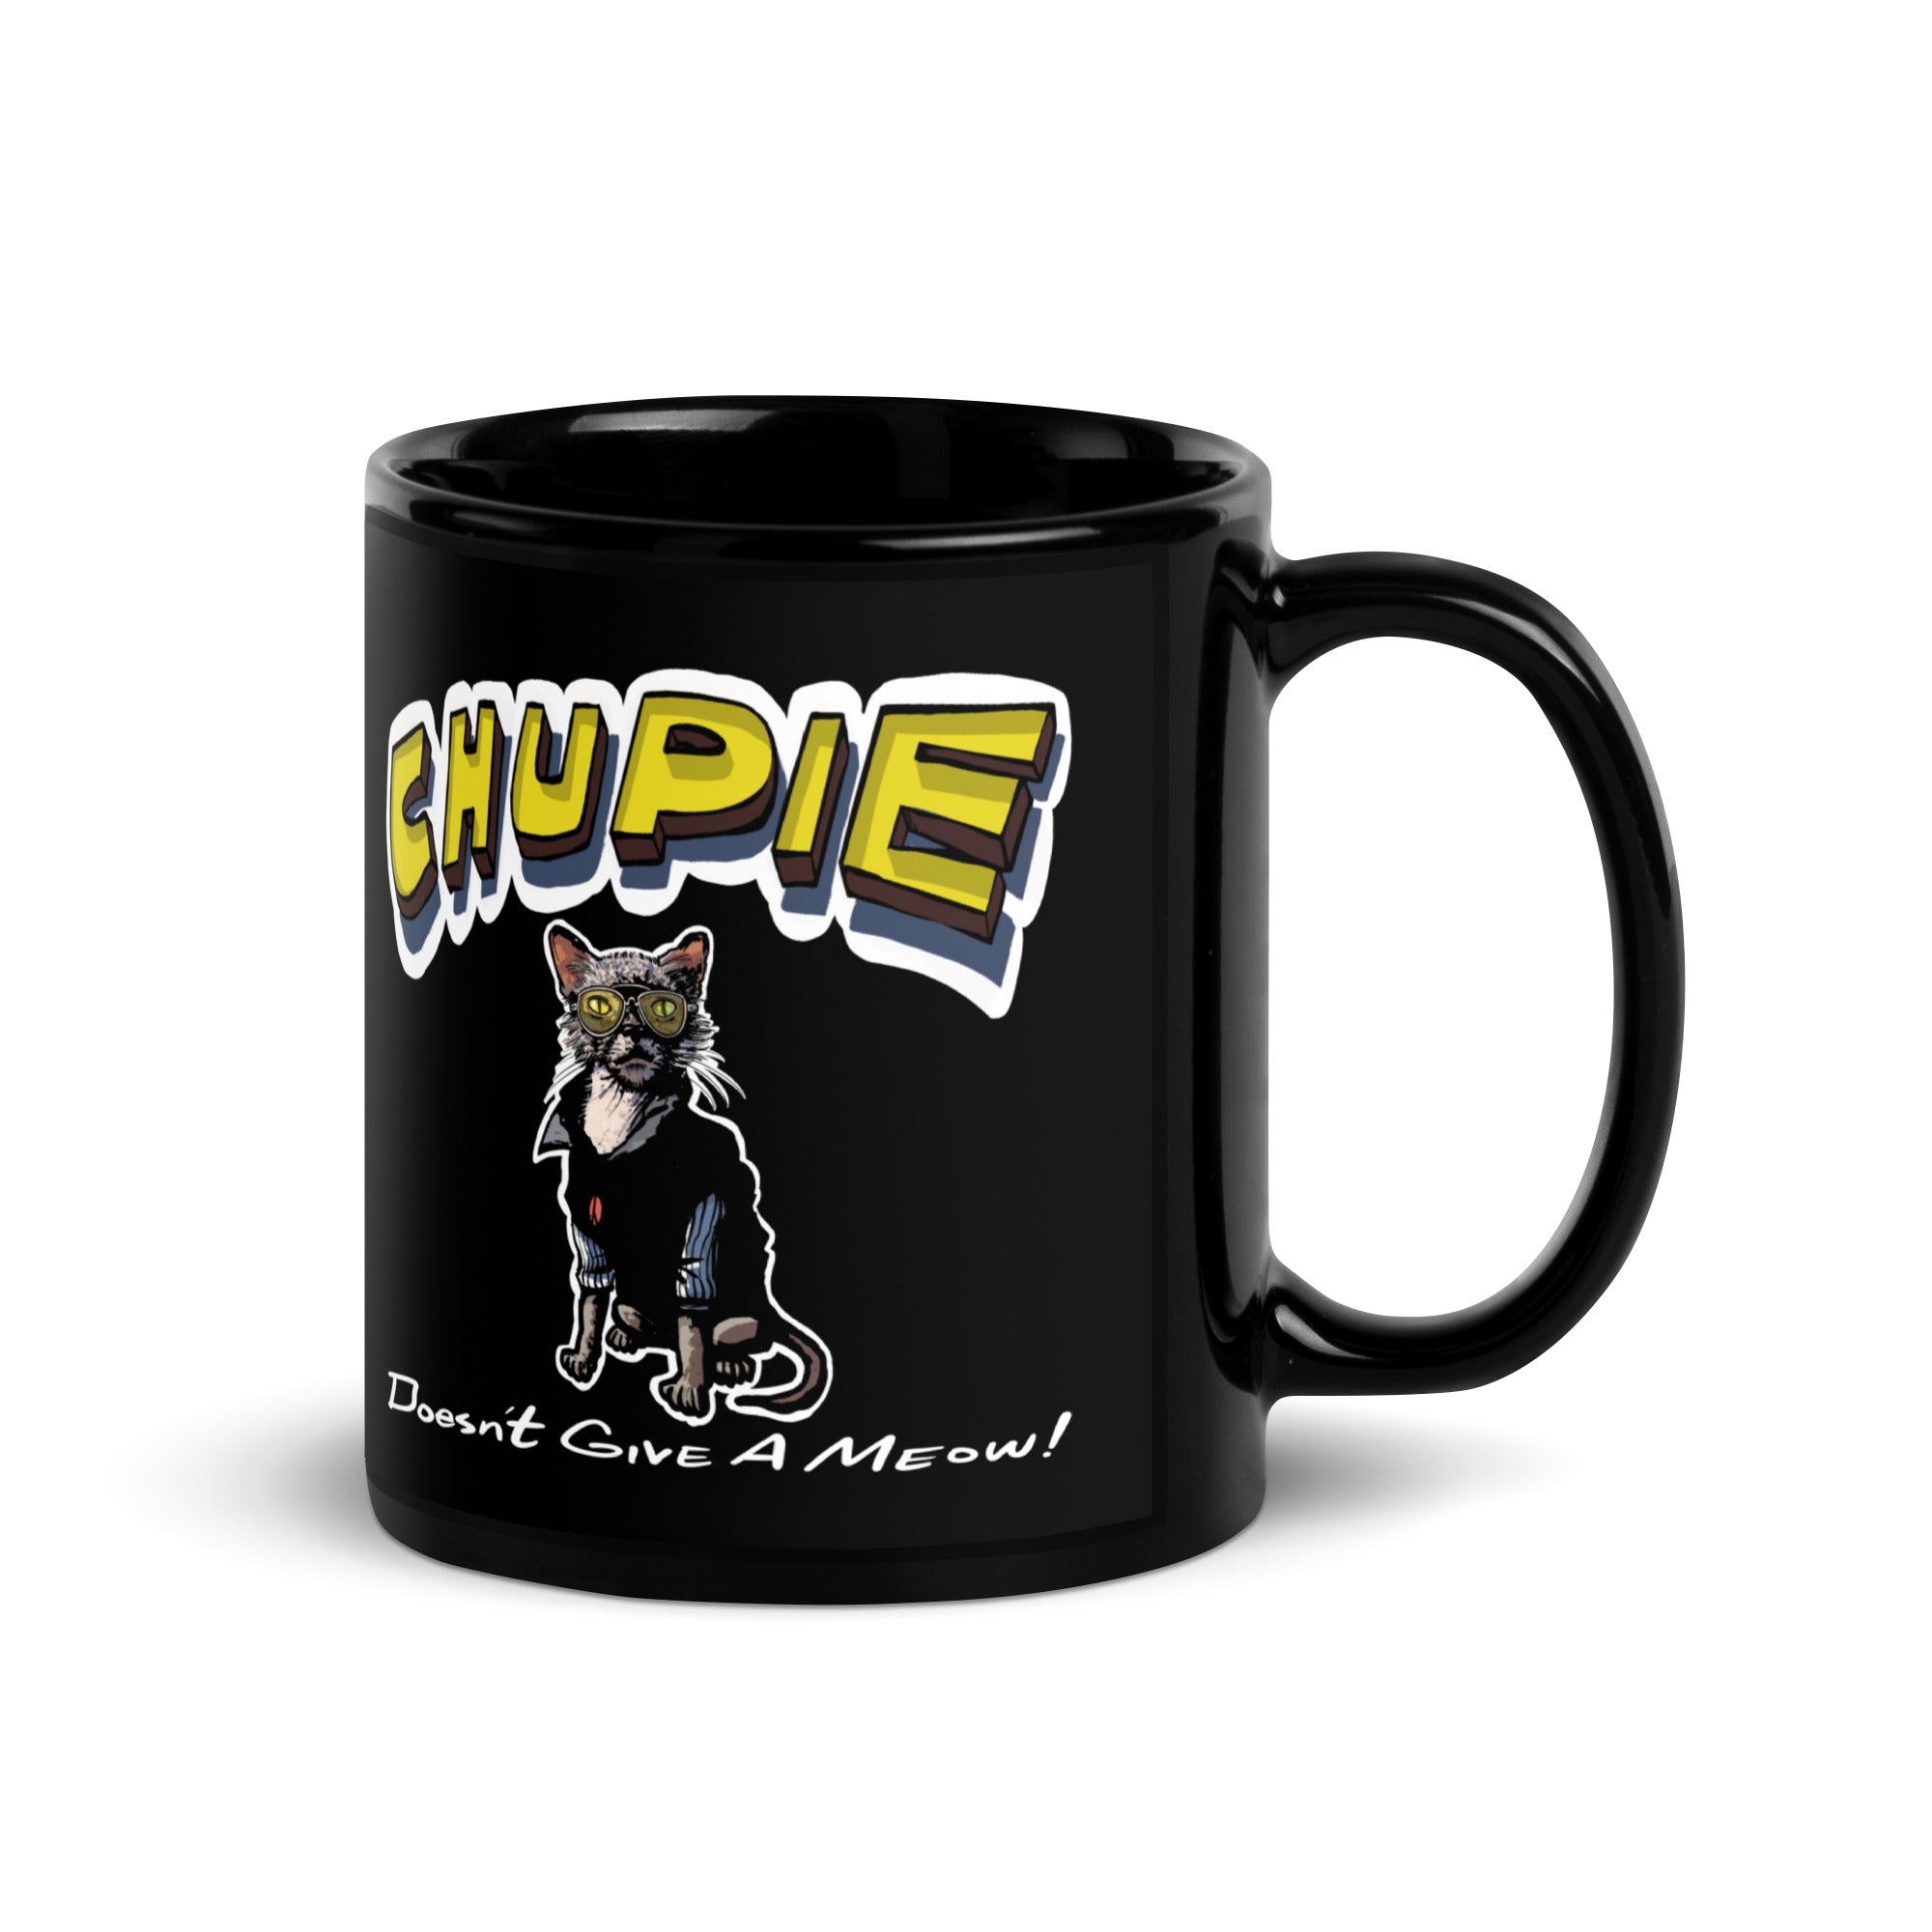 Chupie Doesn't Give A Meow Mug